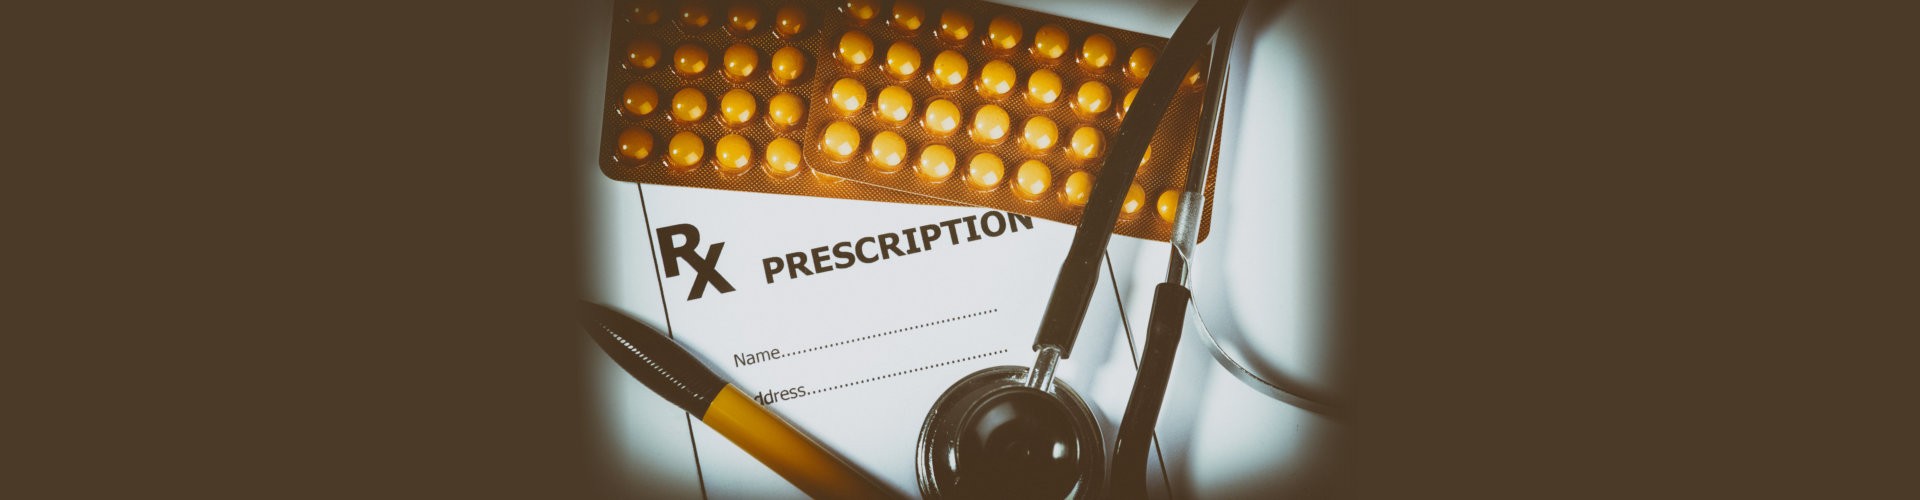 Prescription for drugs against diseases. Vitamin, medicaal.